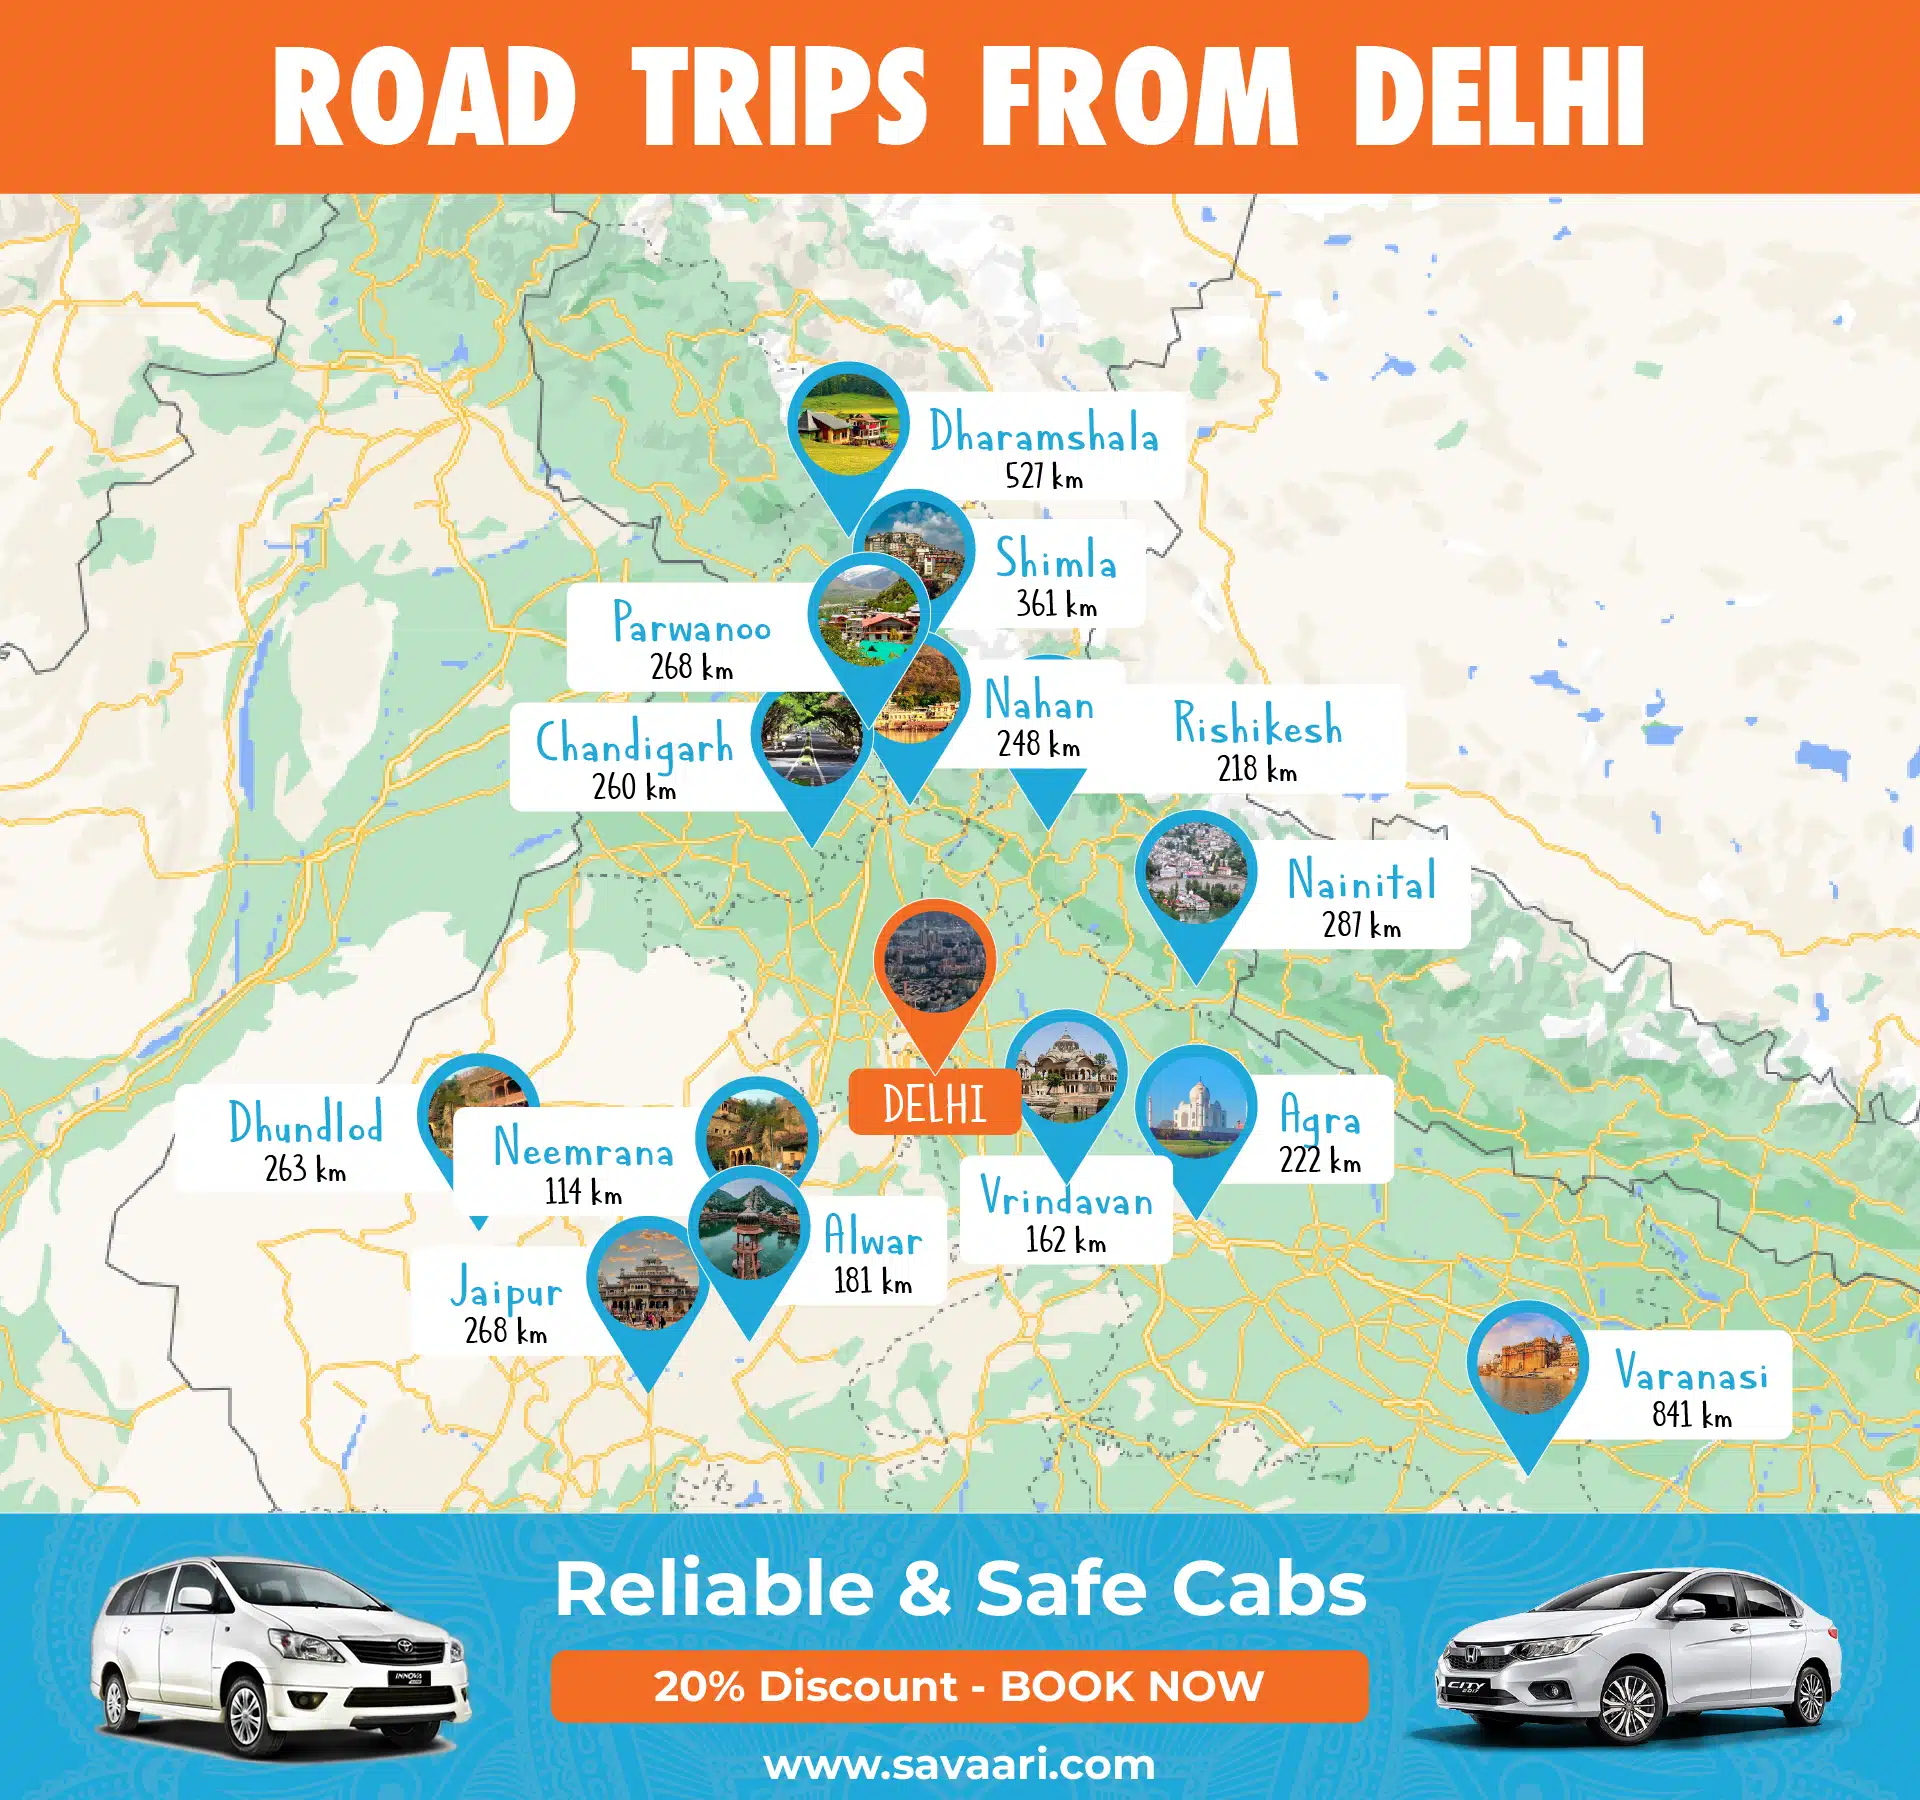 road trip ideas from delhi